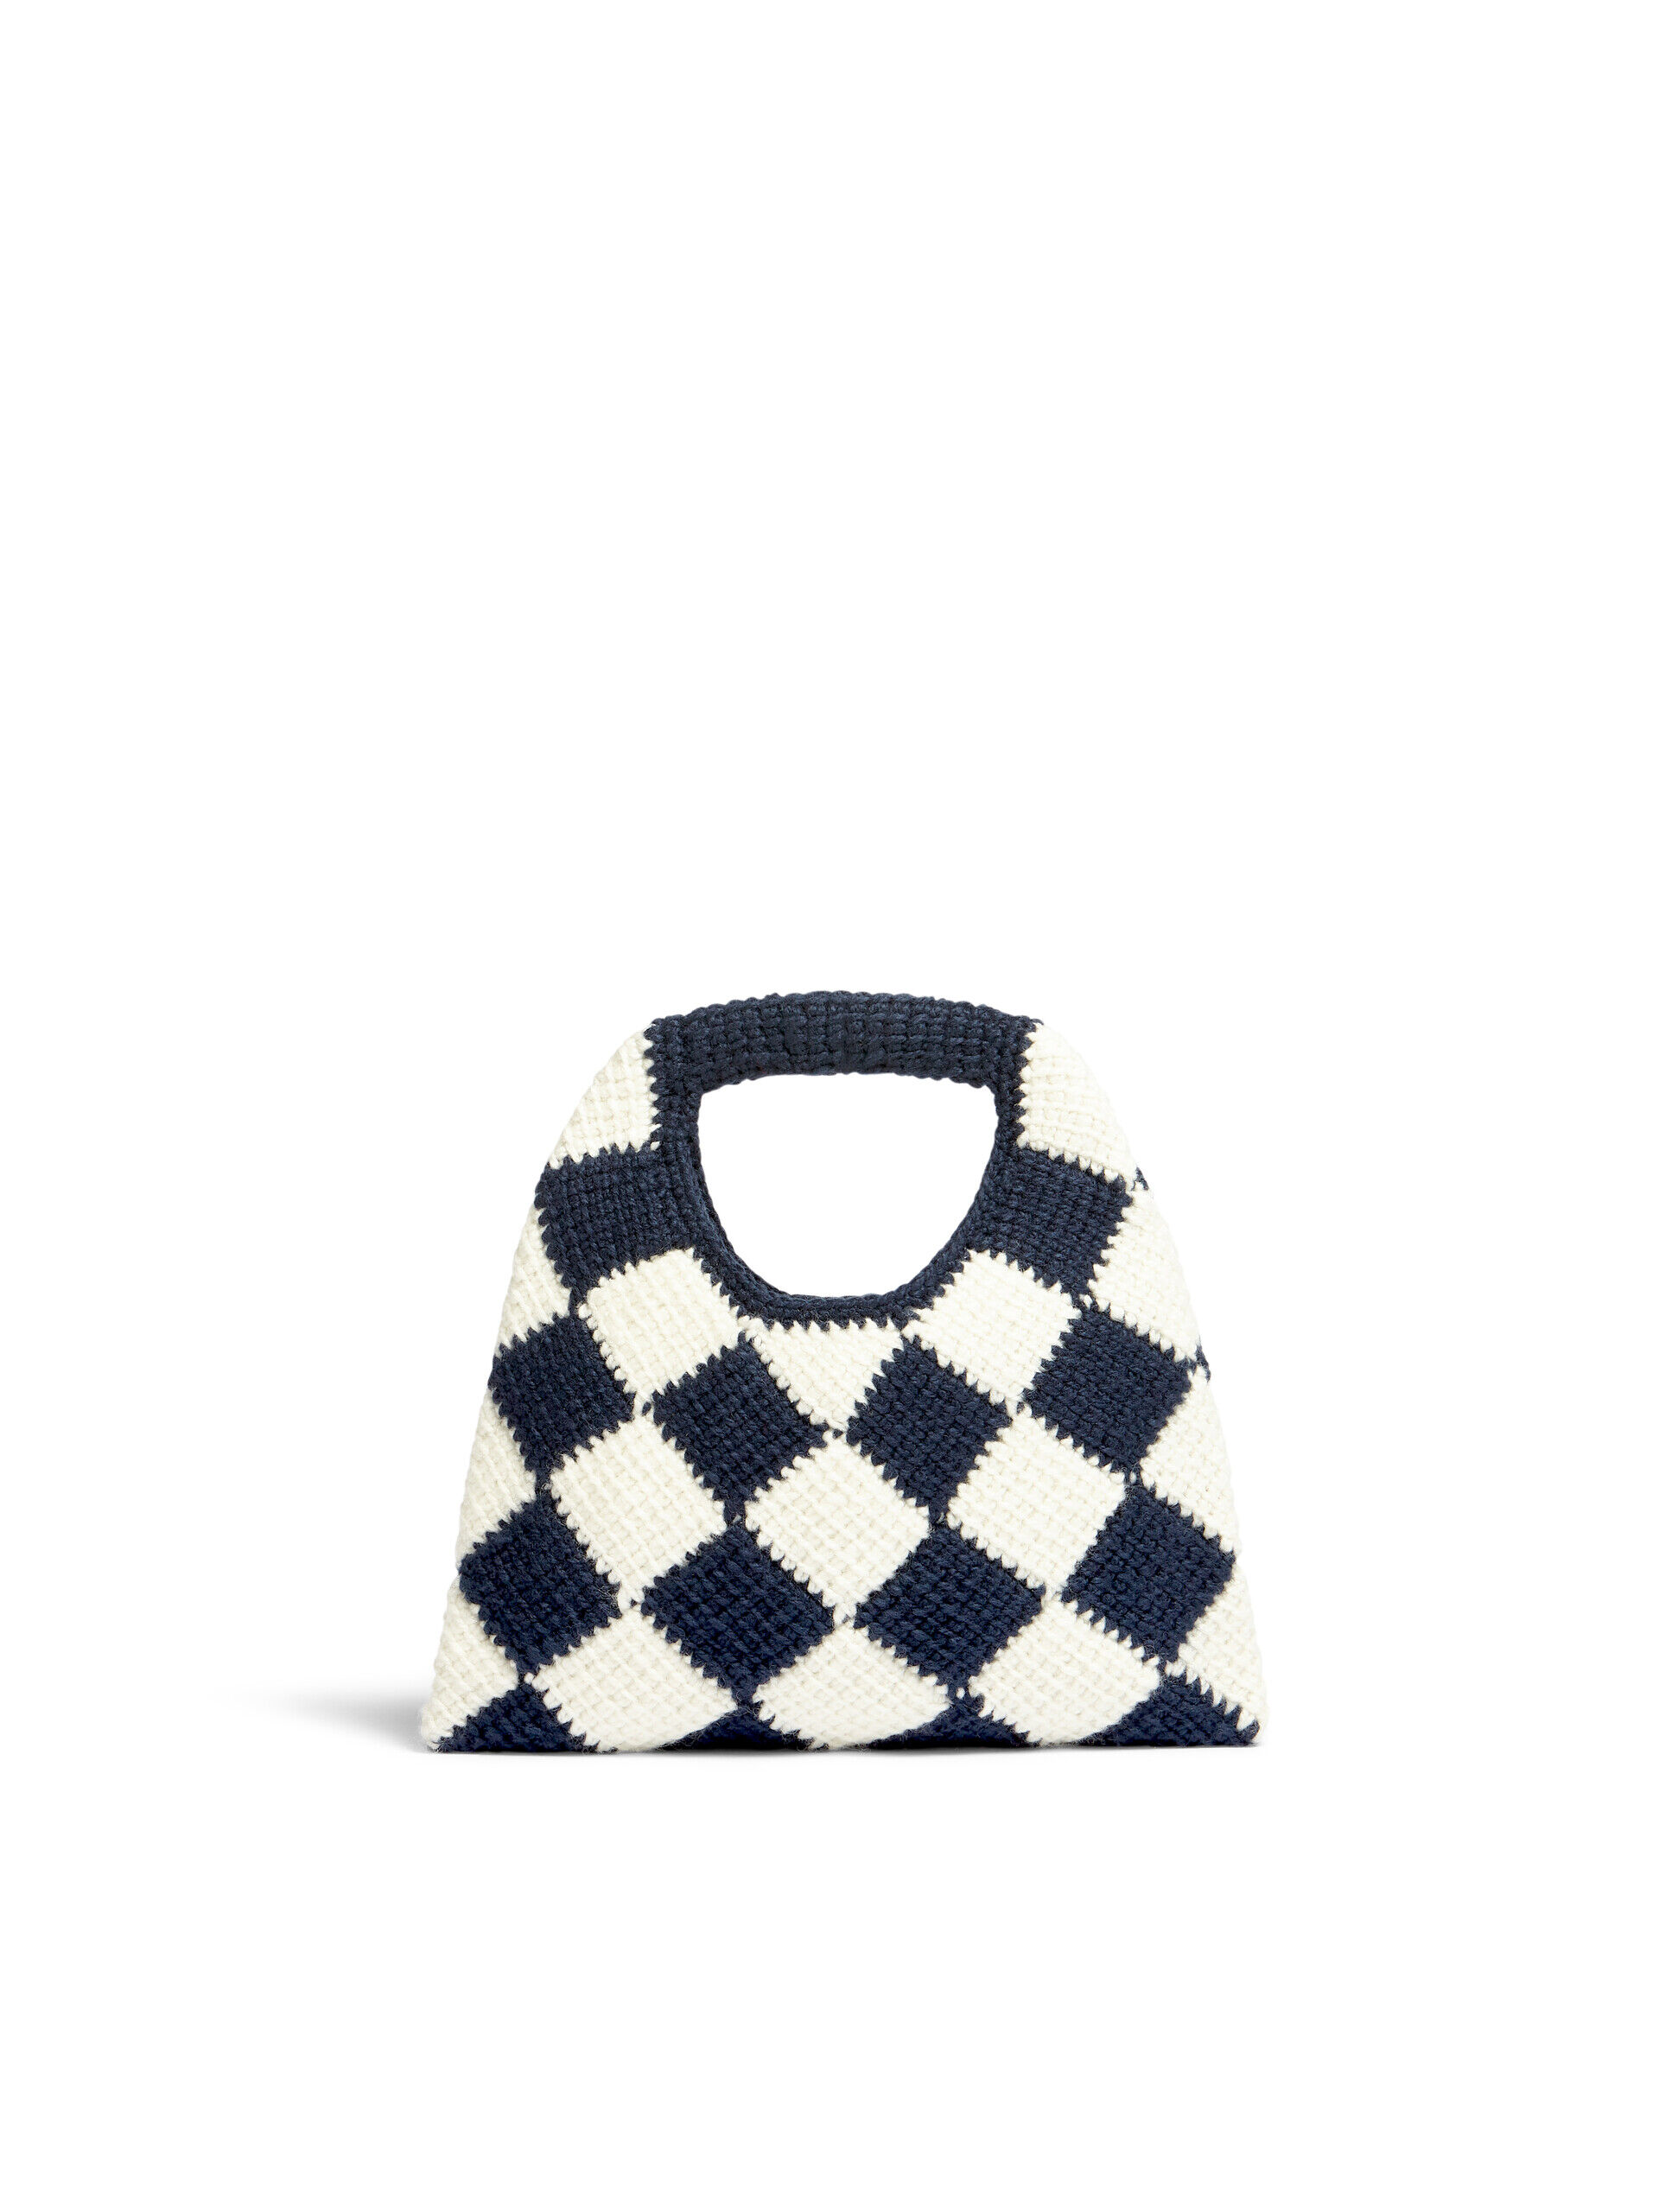 MARNI MARKET DIAMOND small bag in white and blue tech wool | Marni